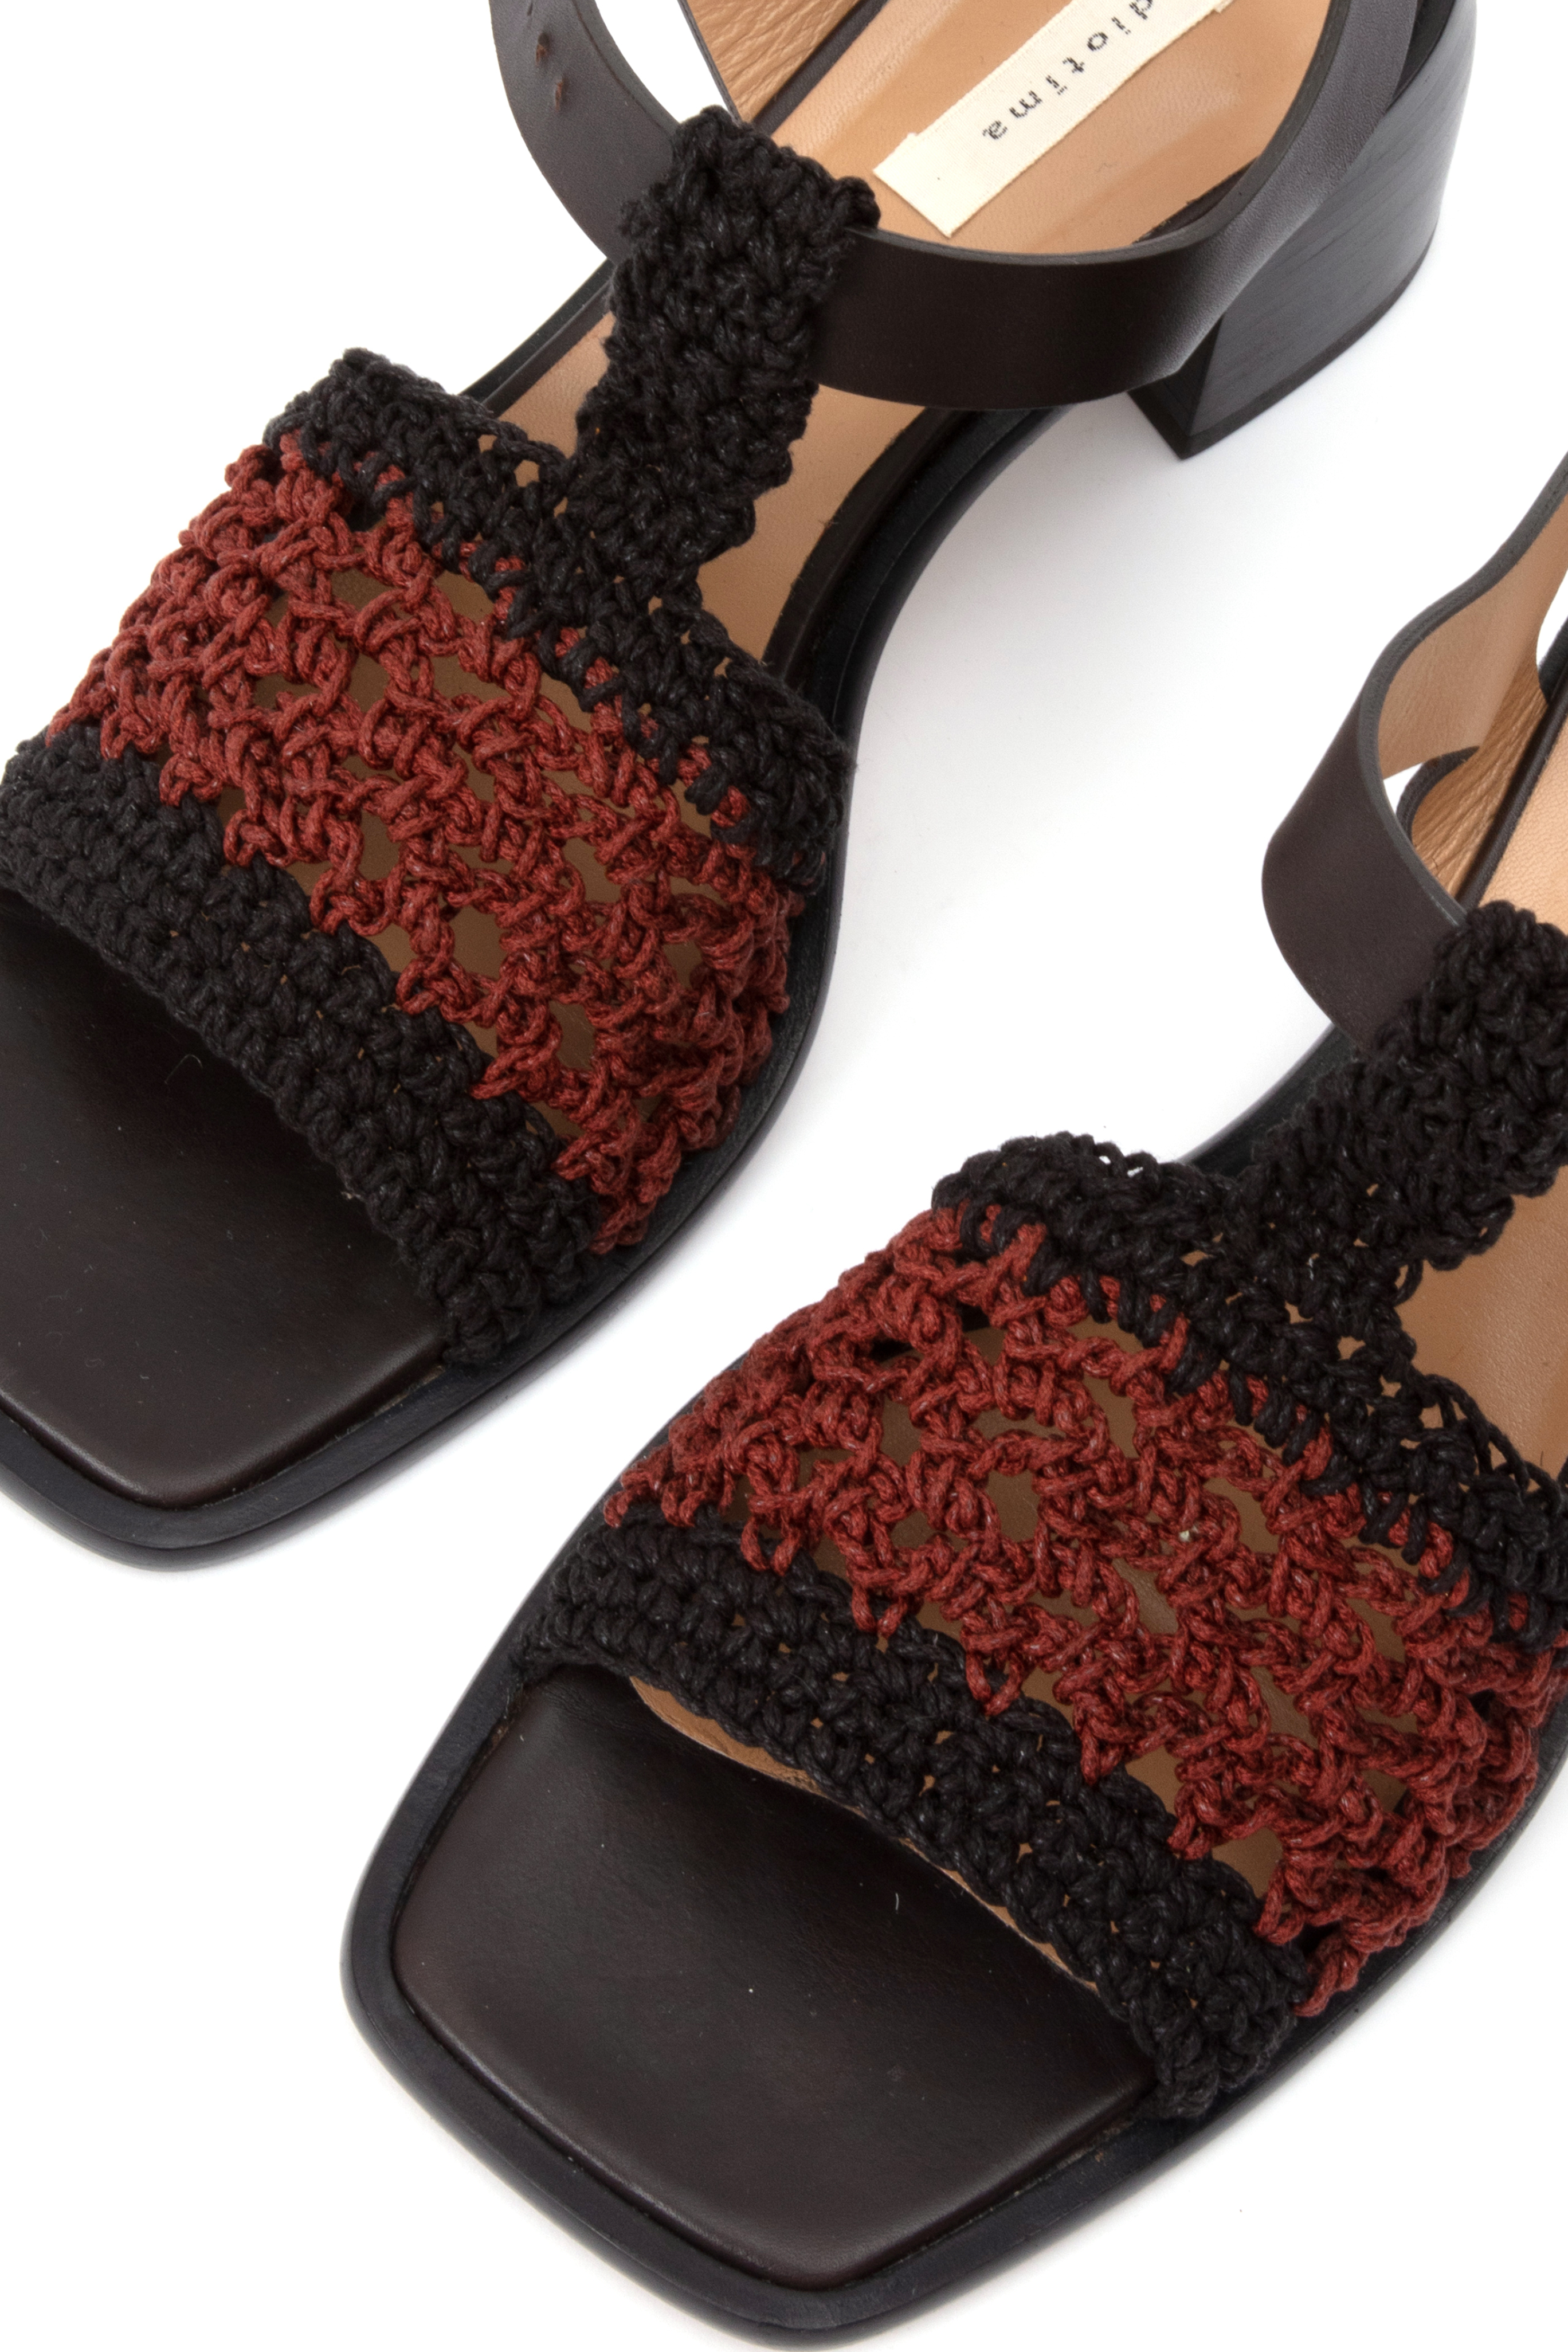 Diotima Manley Crochet Sandals